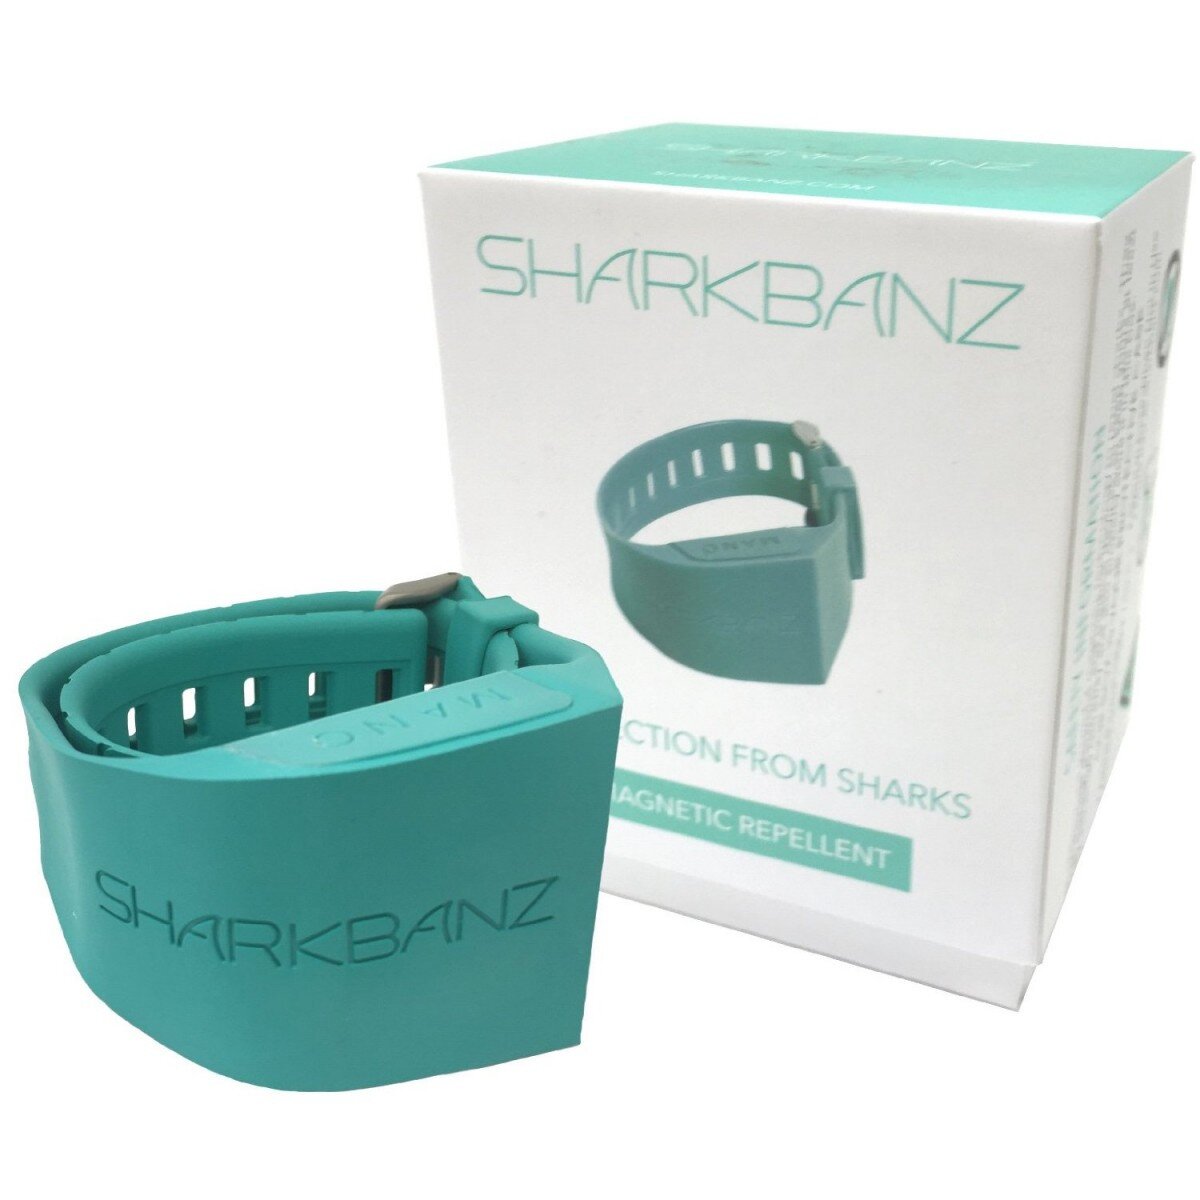 Buy Sharkbanz Shark Repellent Bracelet online Worldwide - Tejar.com